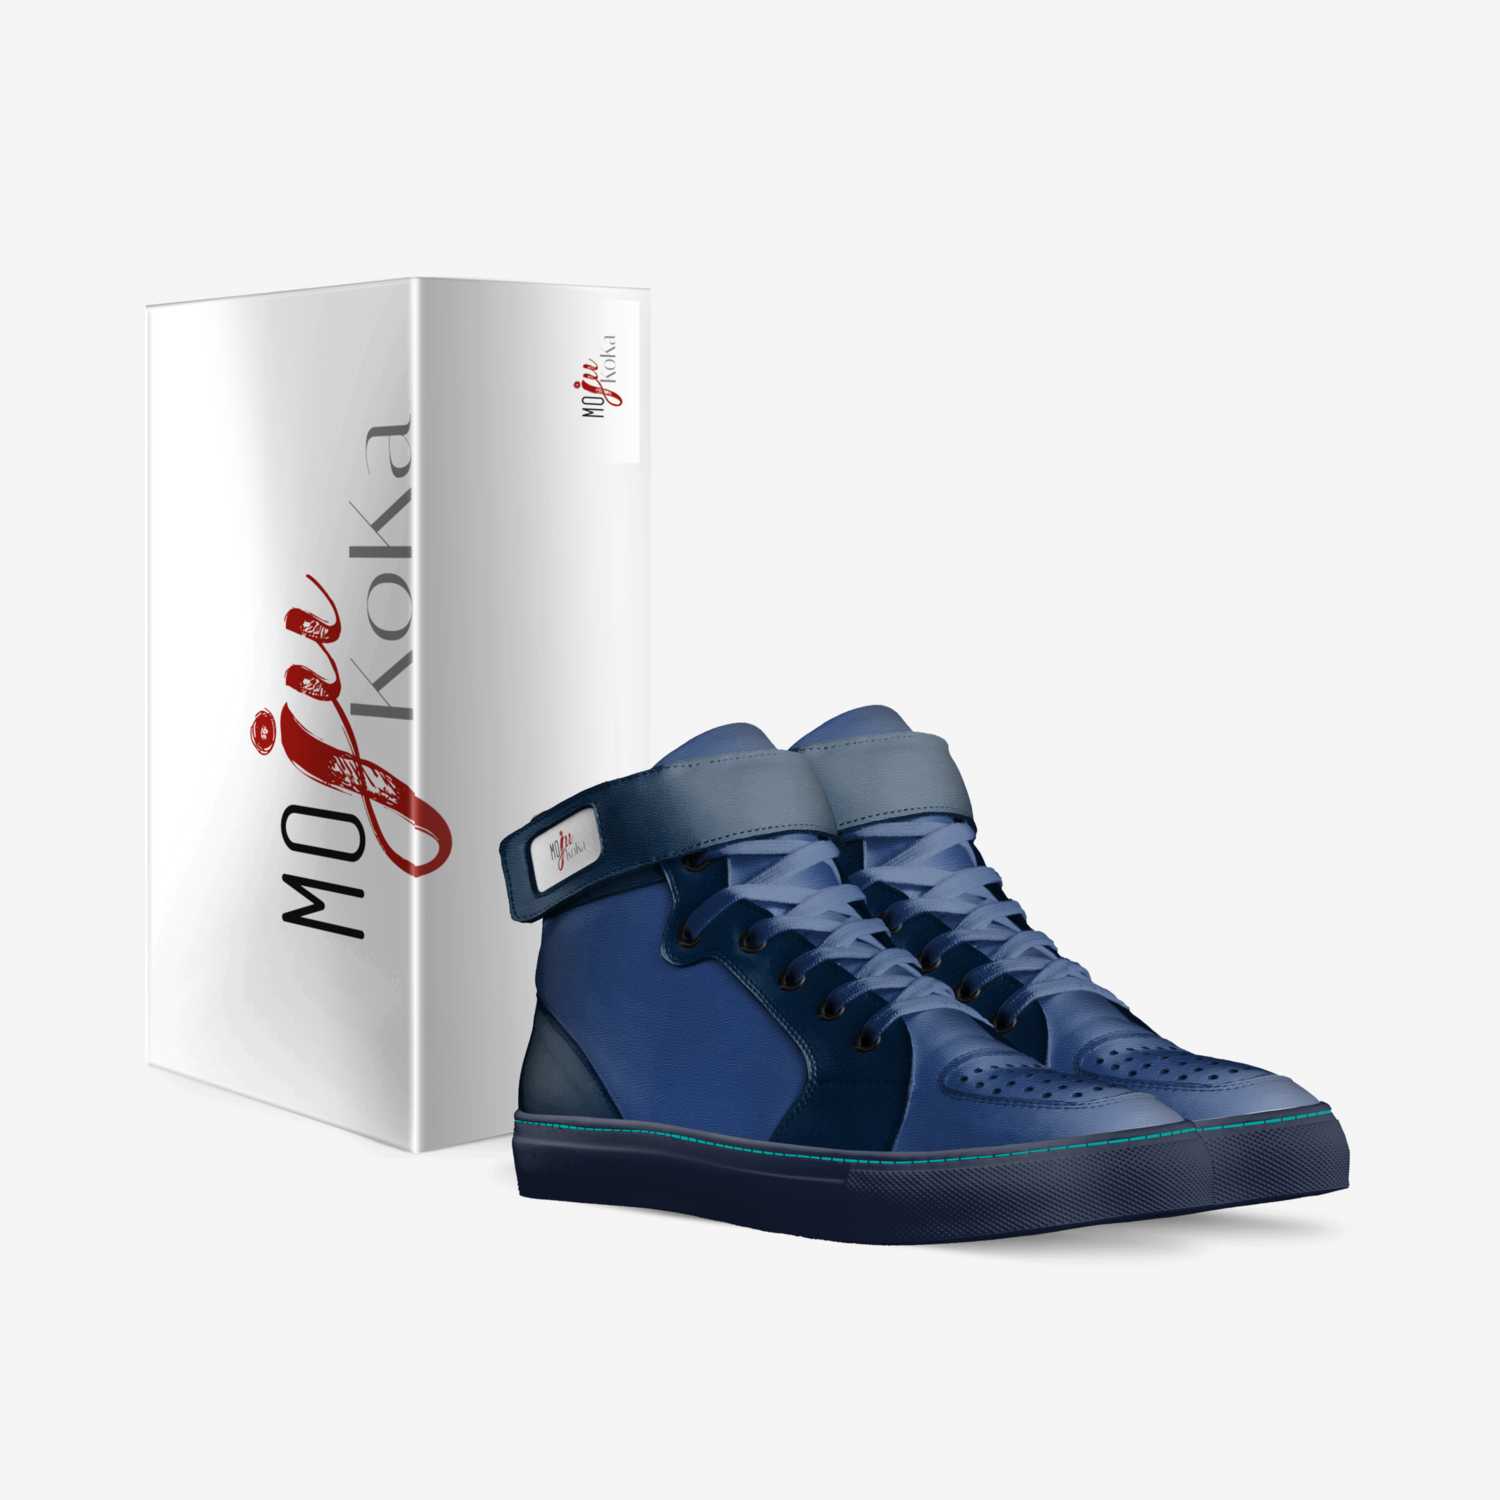 Mojukoka custom made in Italy shoes by De Conicci Brand | Box view